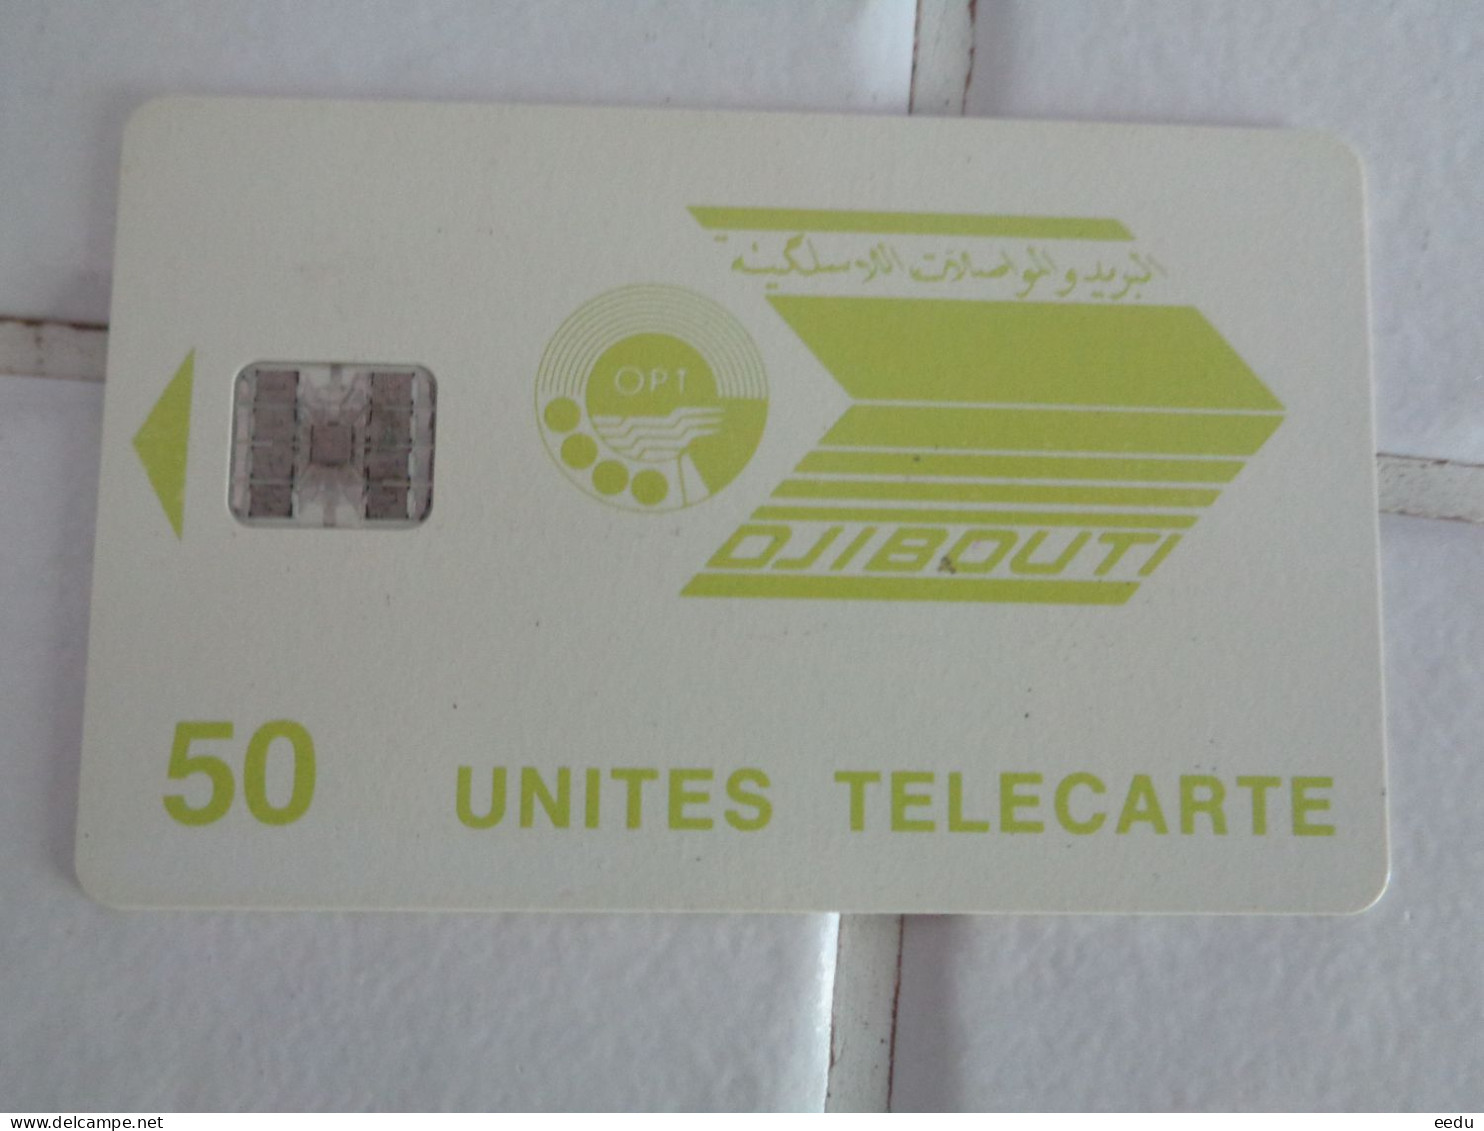 Djibouti Phonecard - Dschibuti